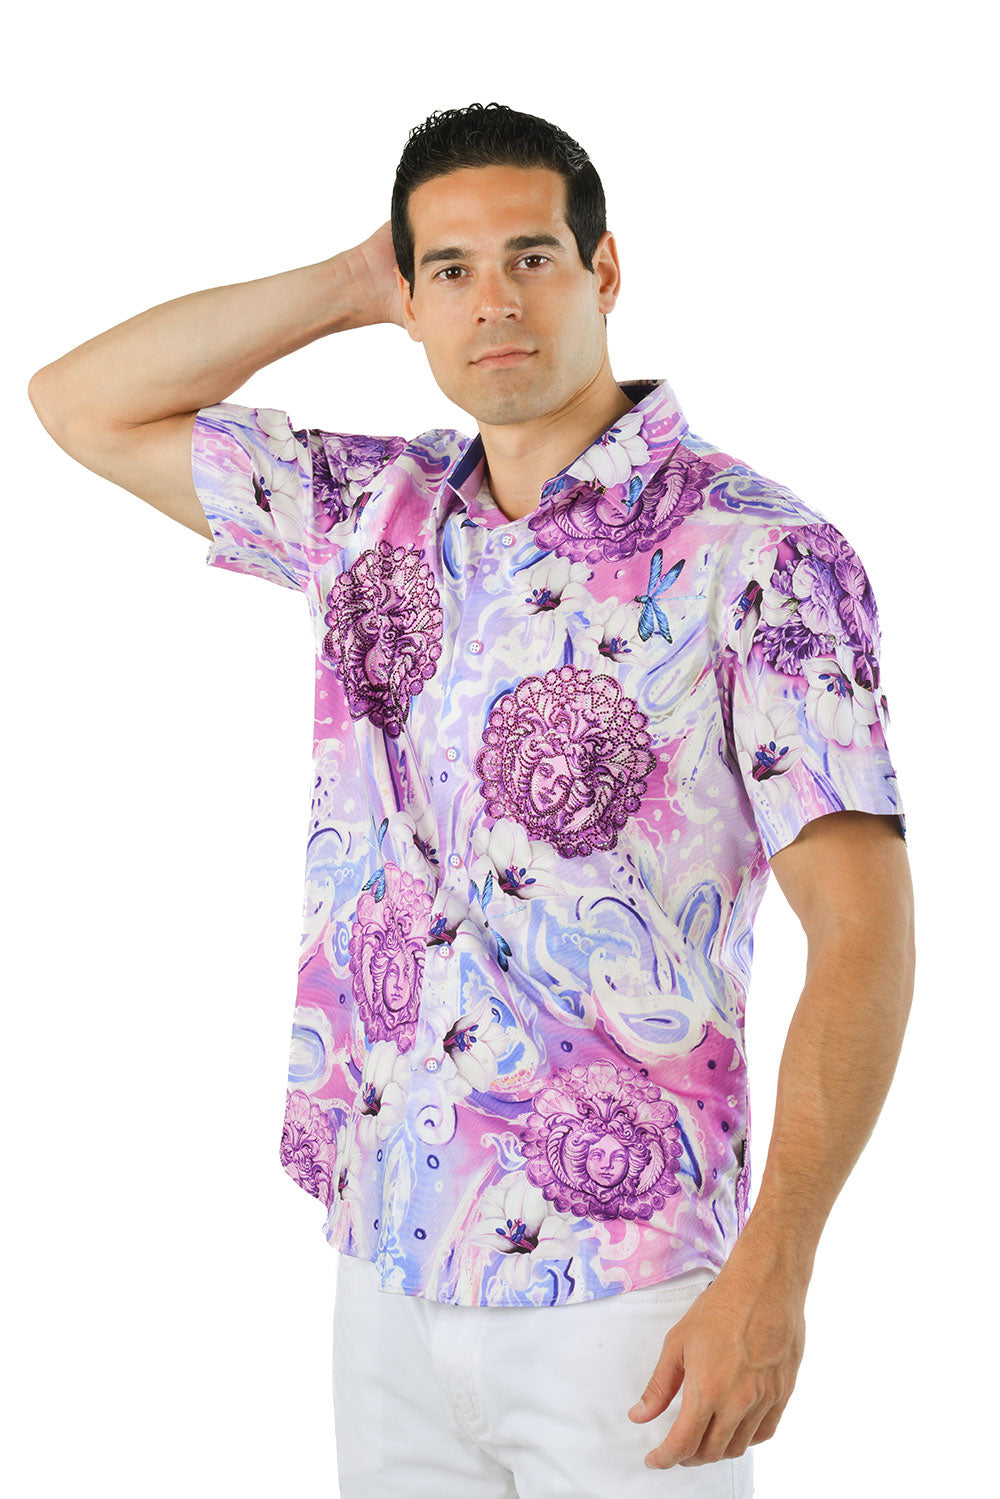 BARABAS Men's medusa paisley rhinestones graphic short sleeve shirt SSR19 pink